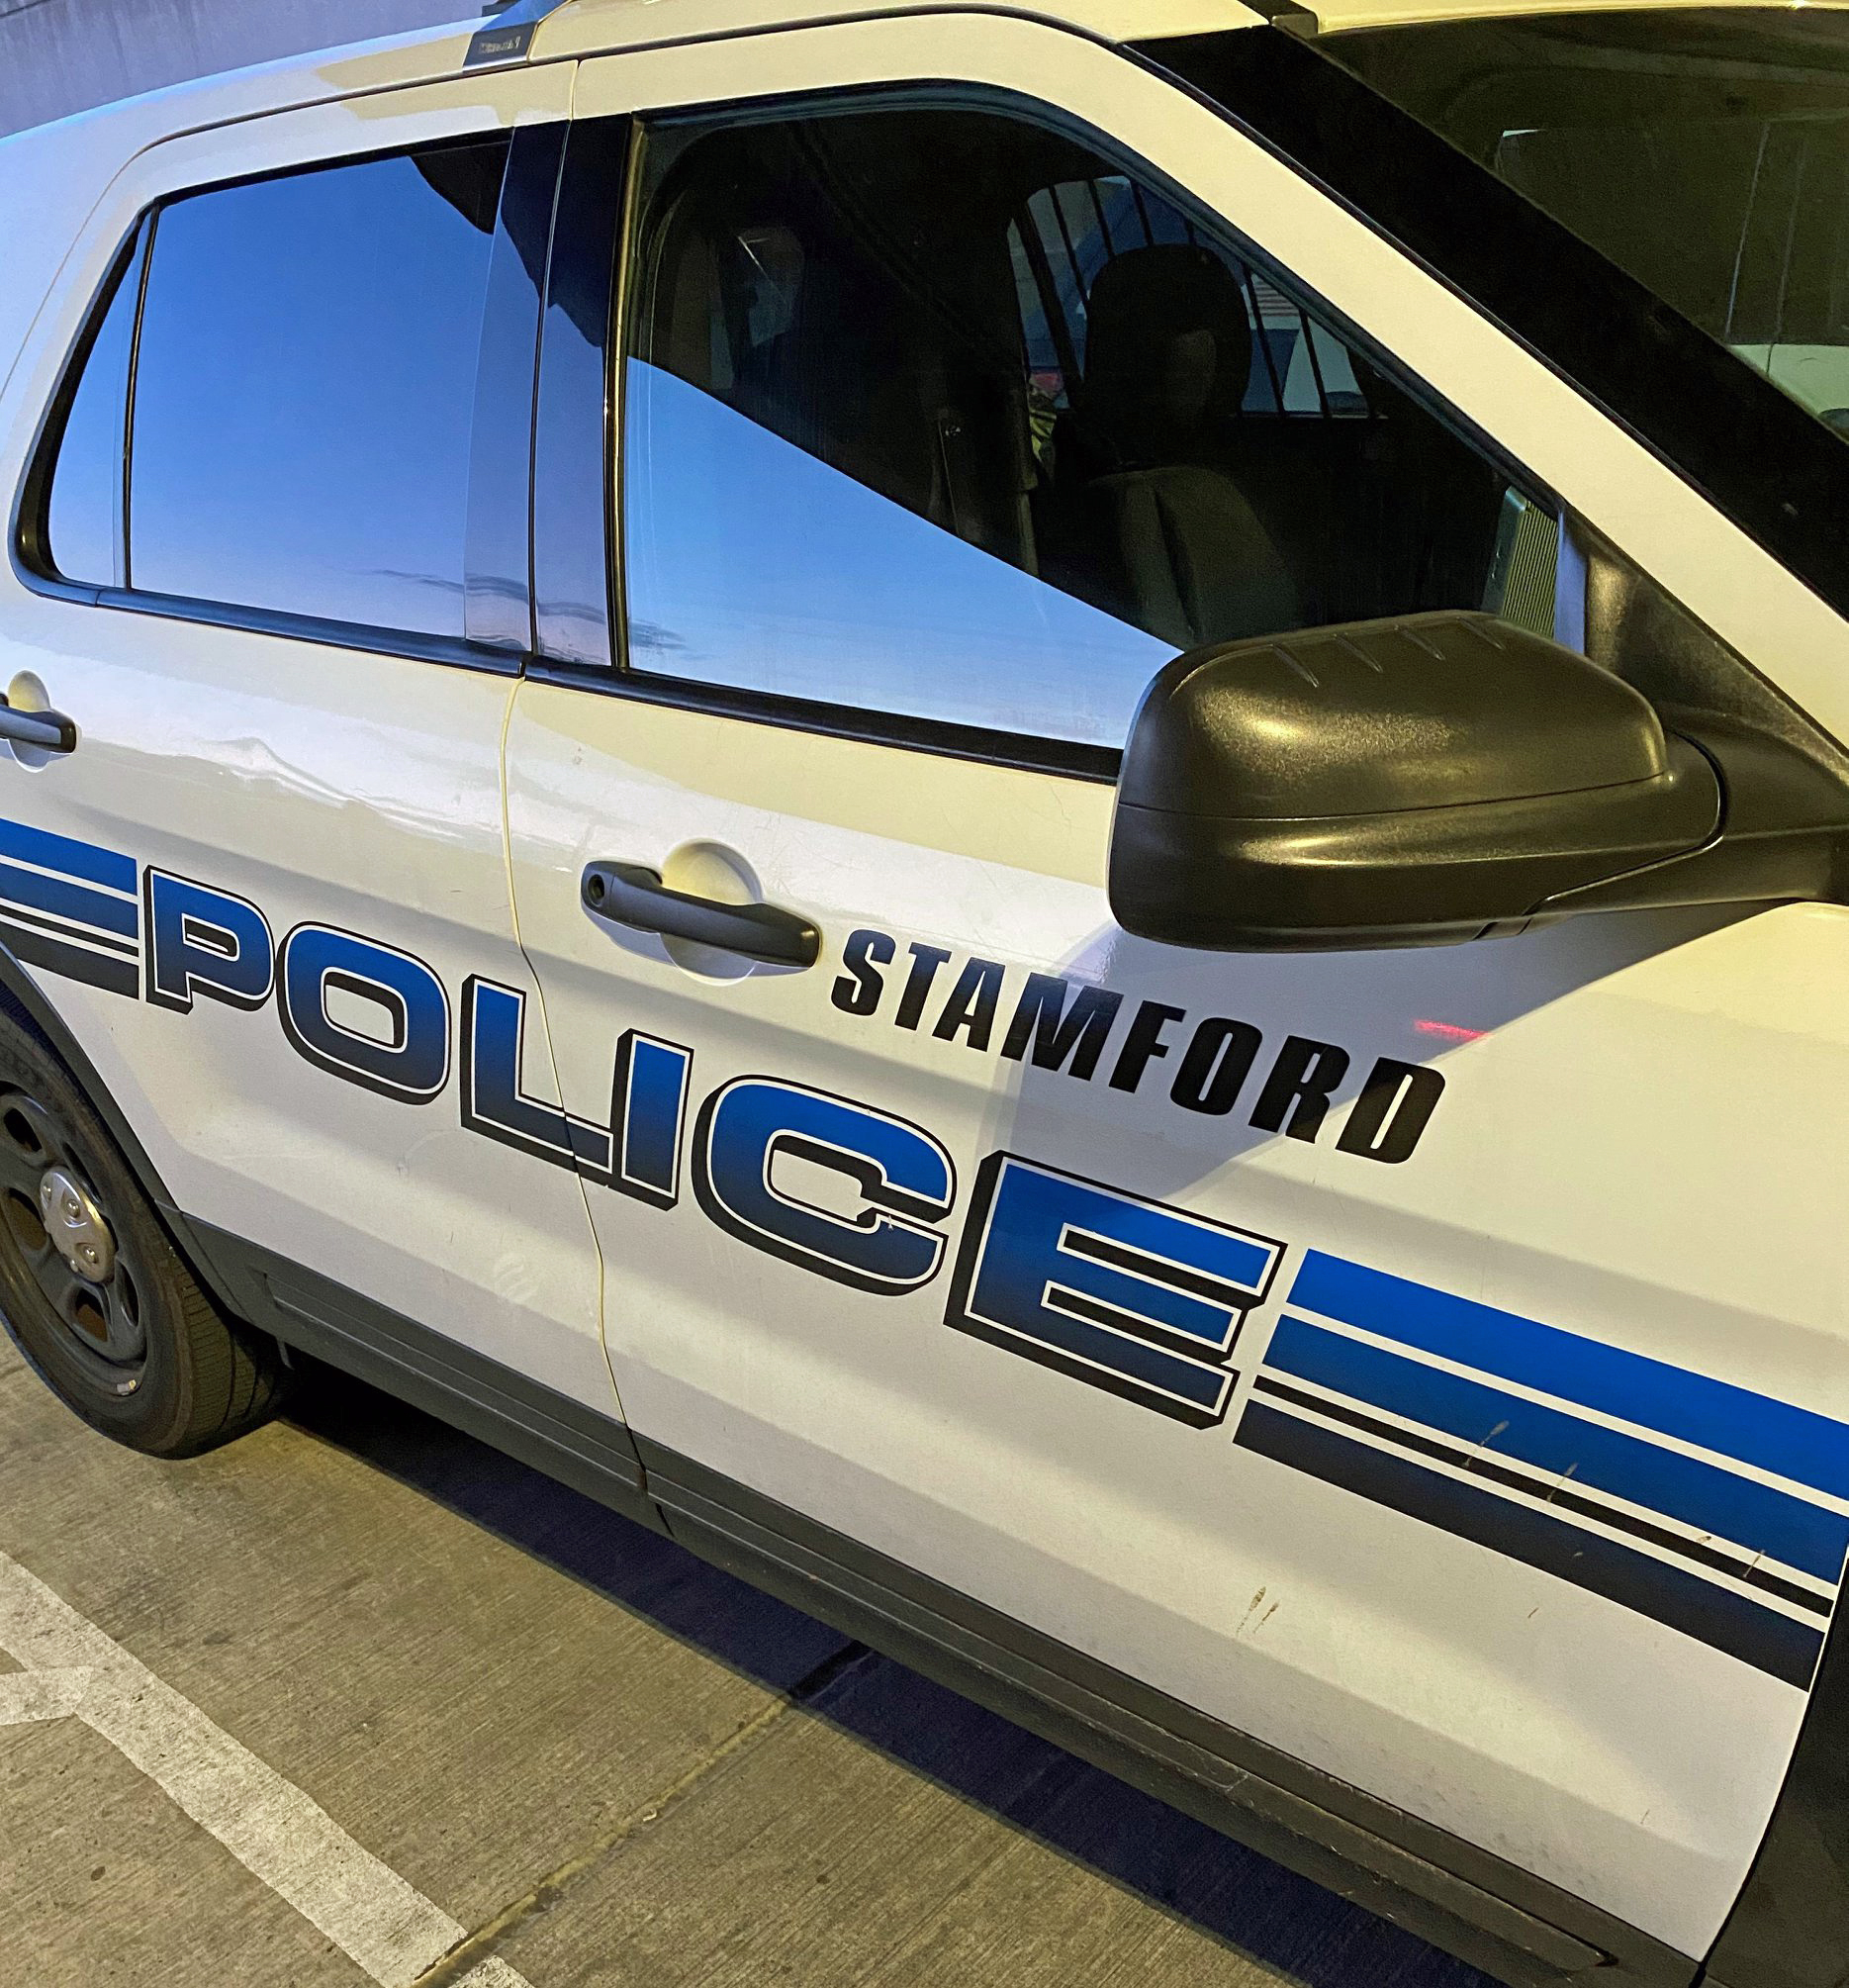 Motorcyclist, 17, killed in Stamford crash on Lockwood Avenue, police say – Torrington Register Citizen